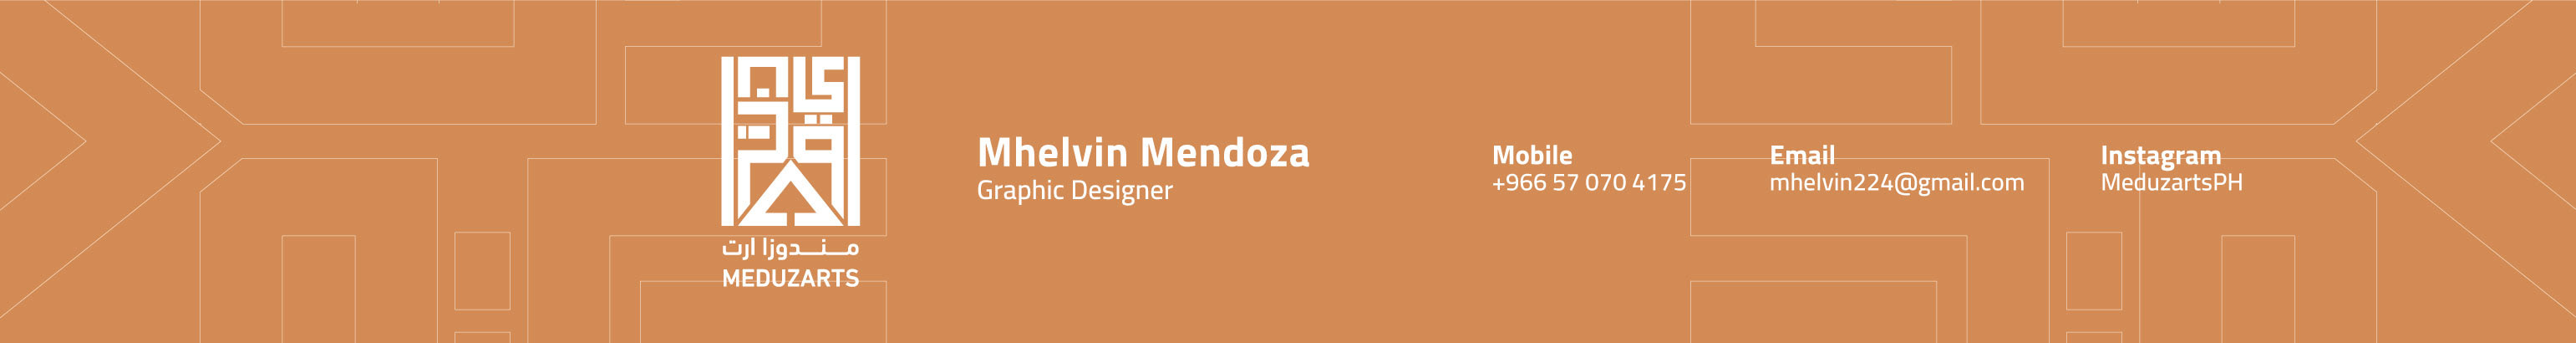 Banner profilu uživatele Mhelvin Mendoza